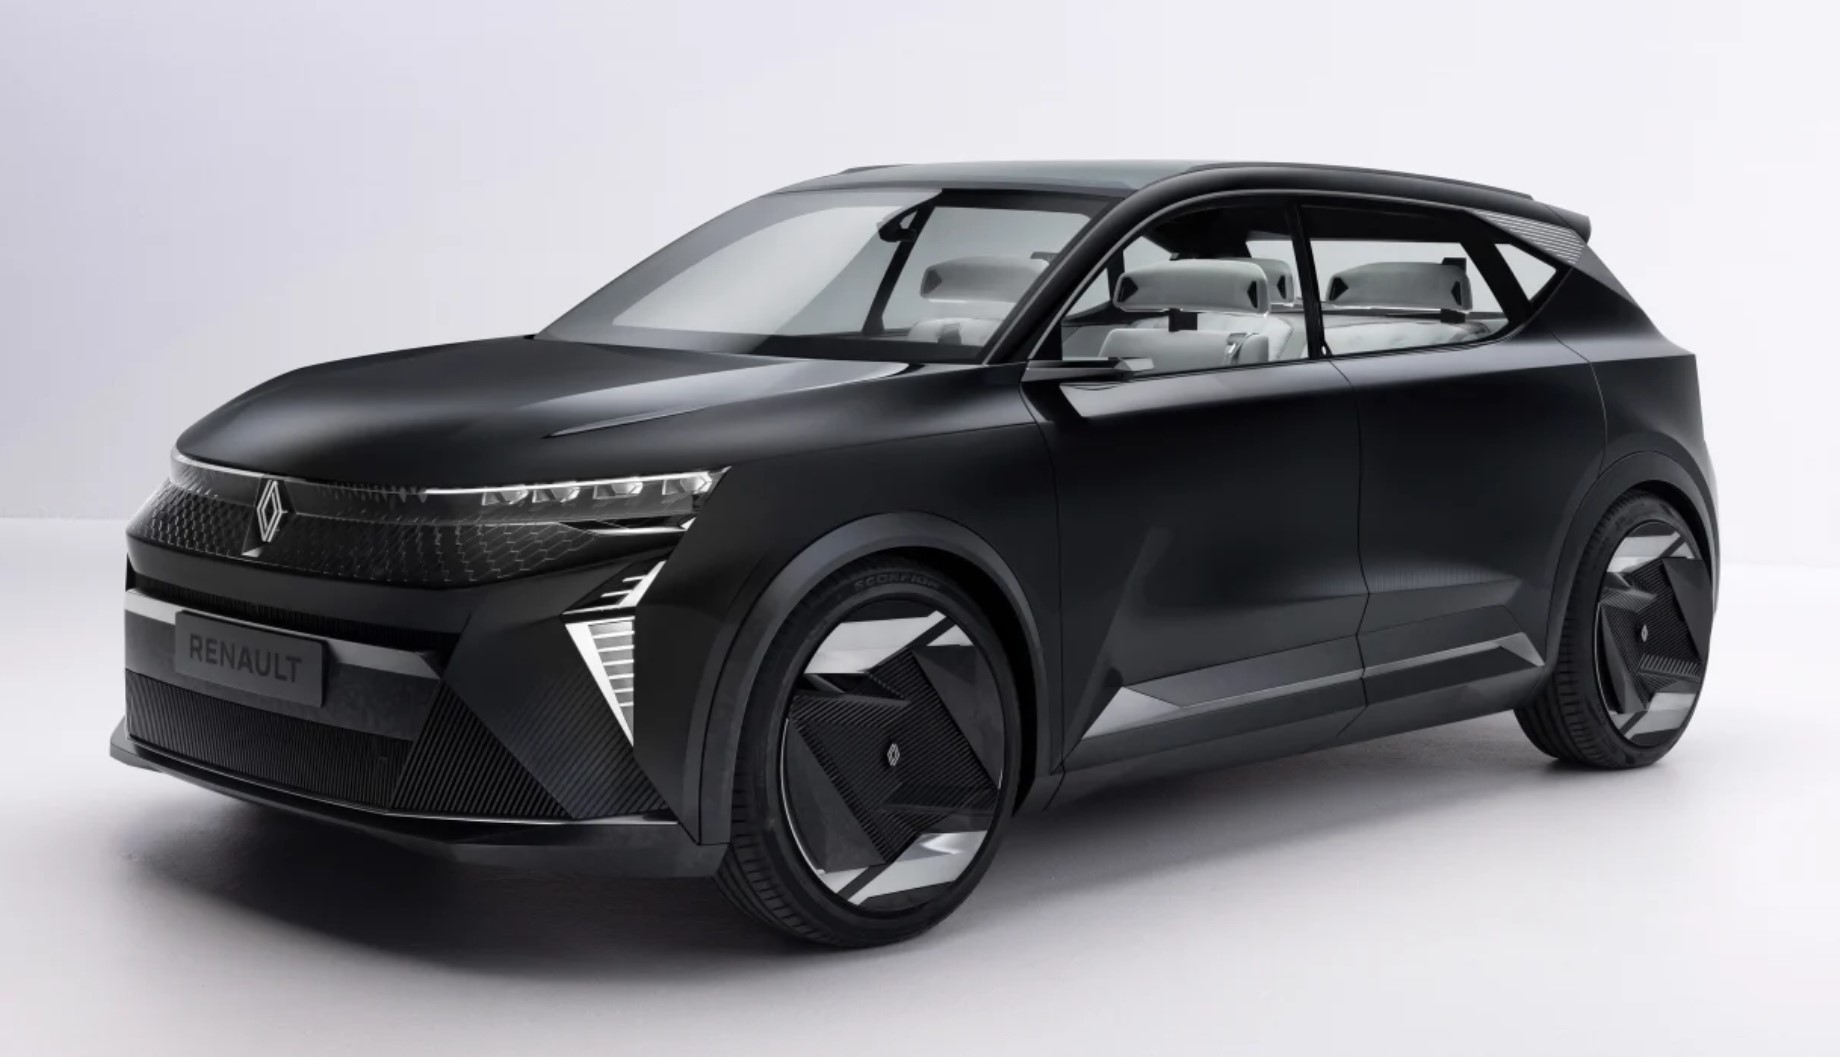 Renault SCenic Vision concept car 1